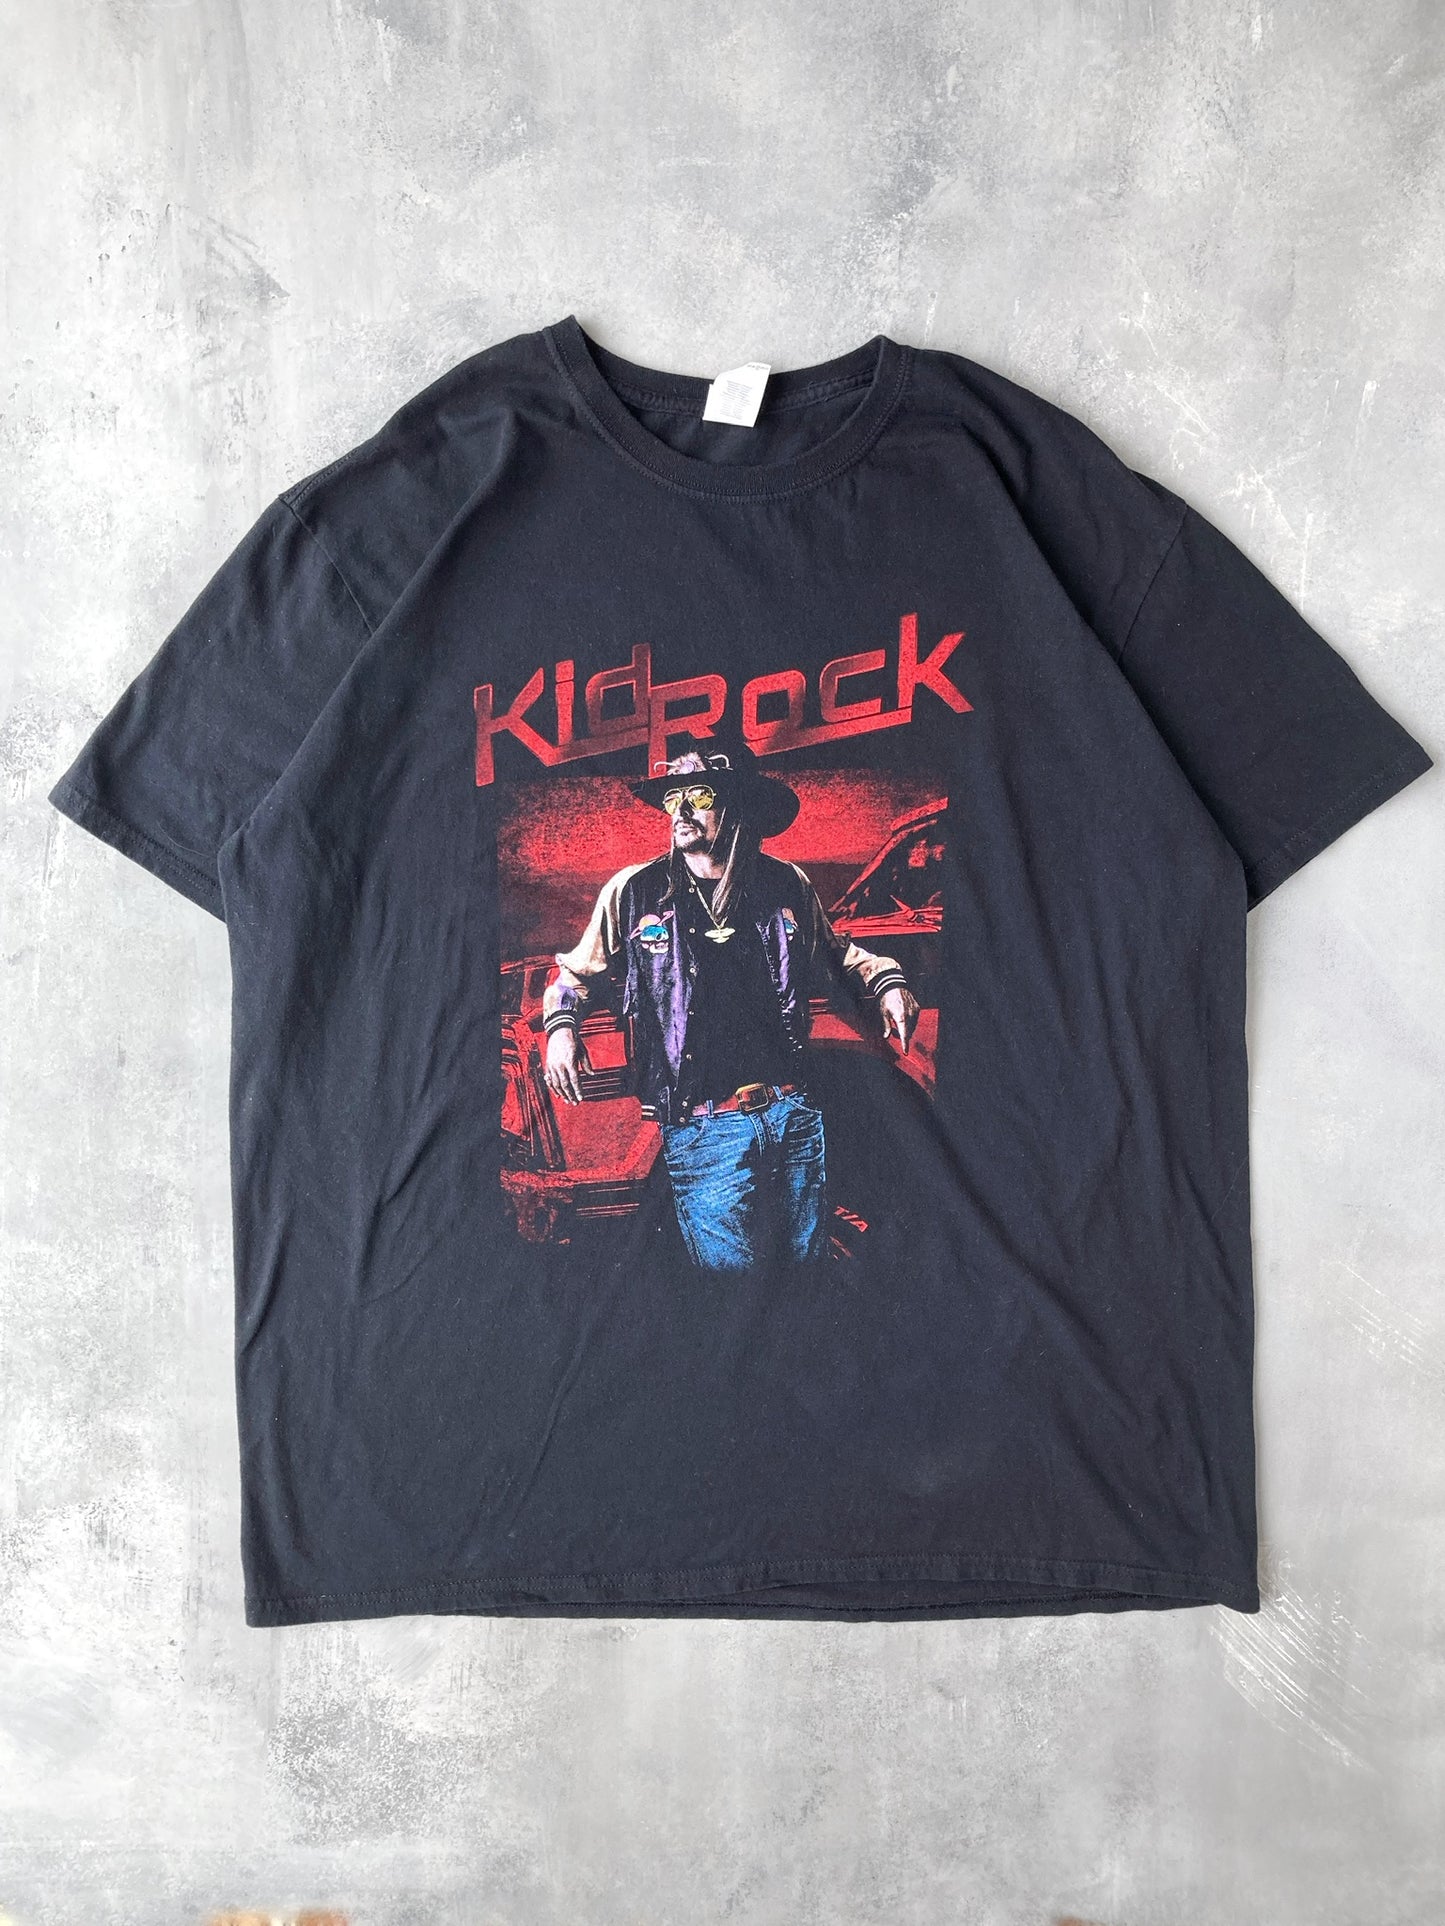 Kid Rock Tour T-Shirt '08 - XXL